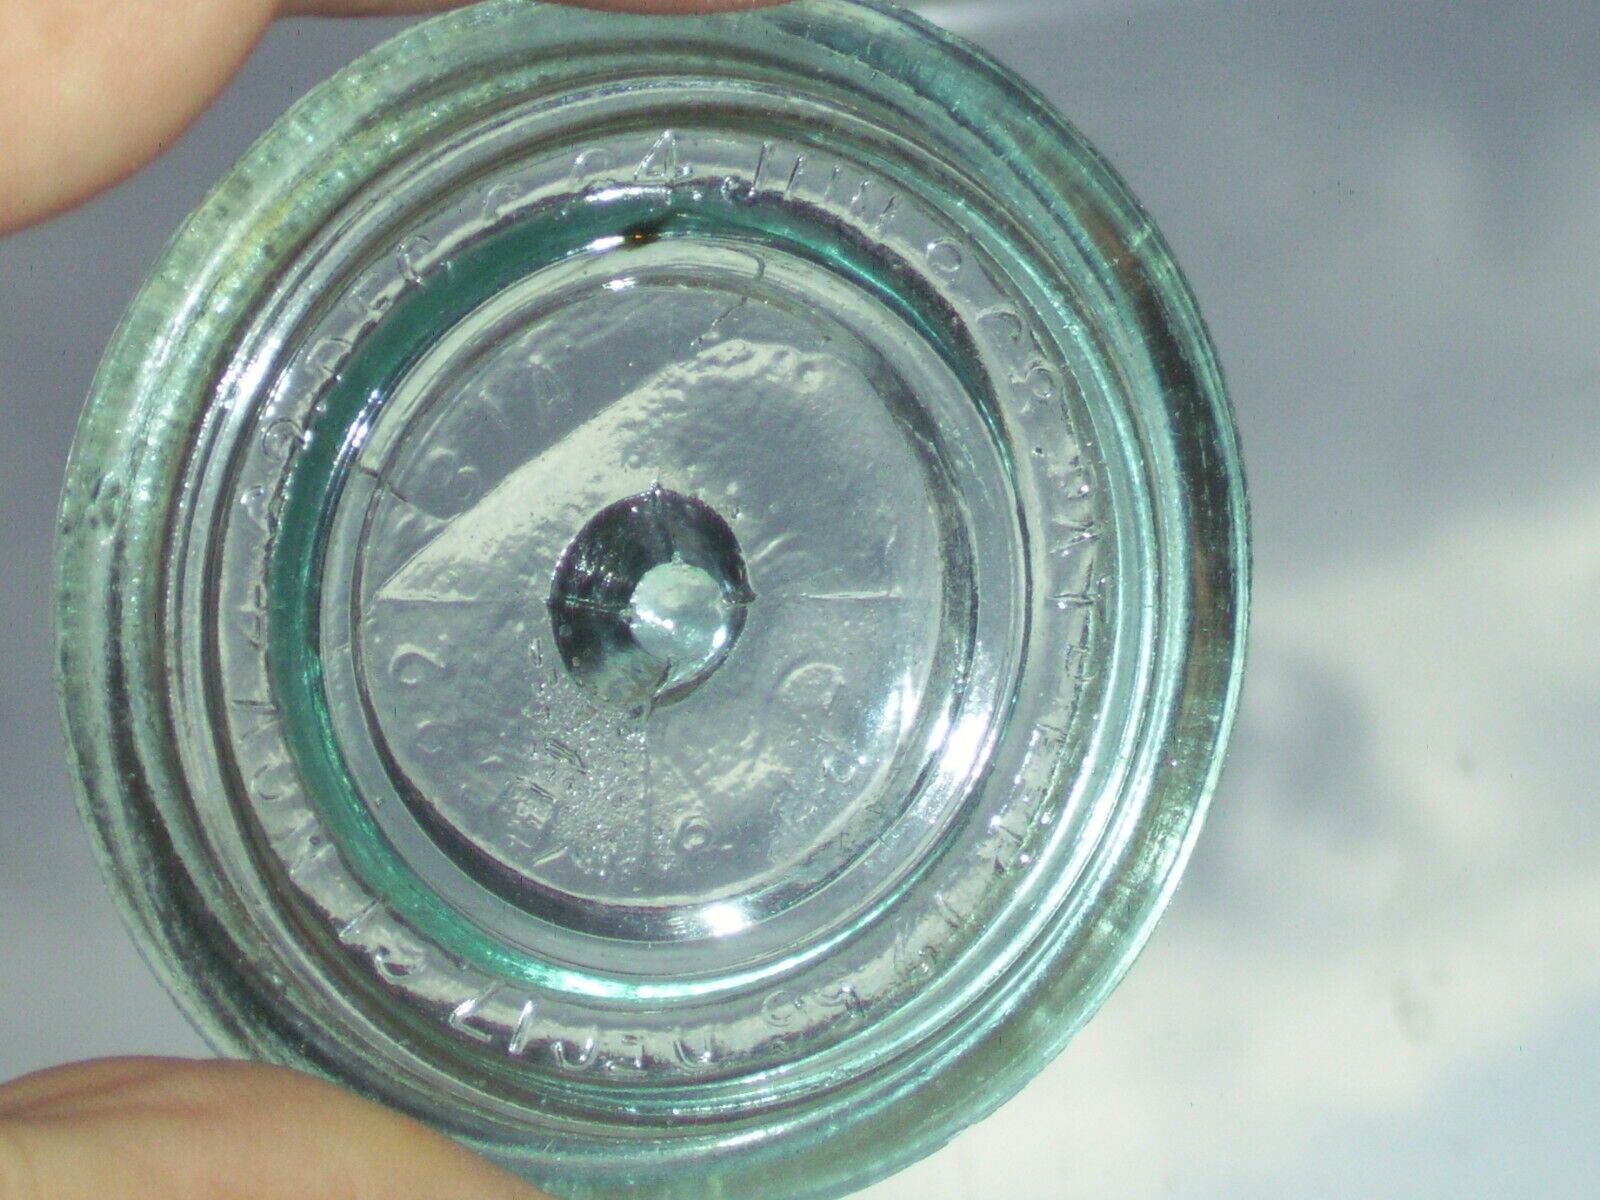 Weak embossed dates, The Gem midget glass canning jar insert & no zinc band